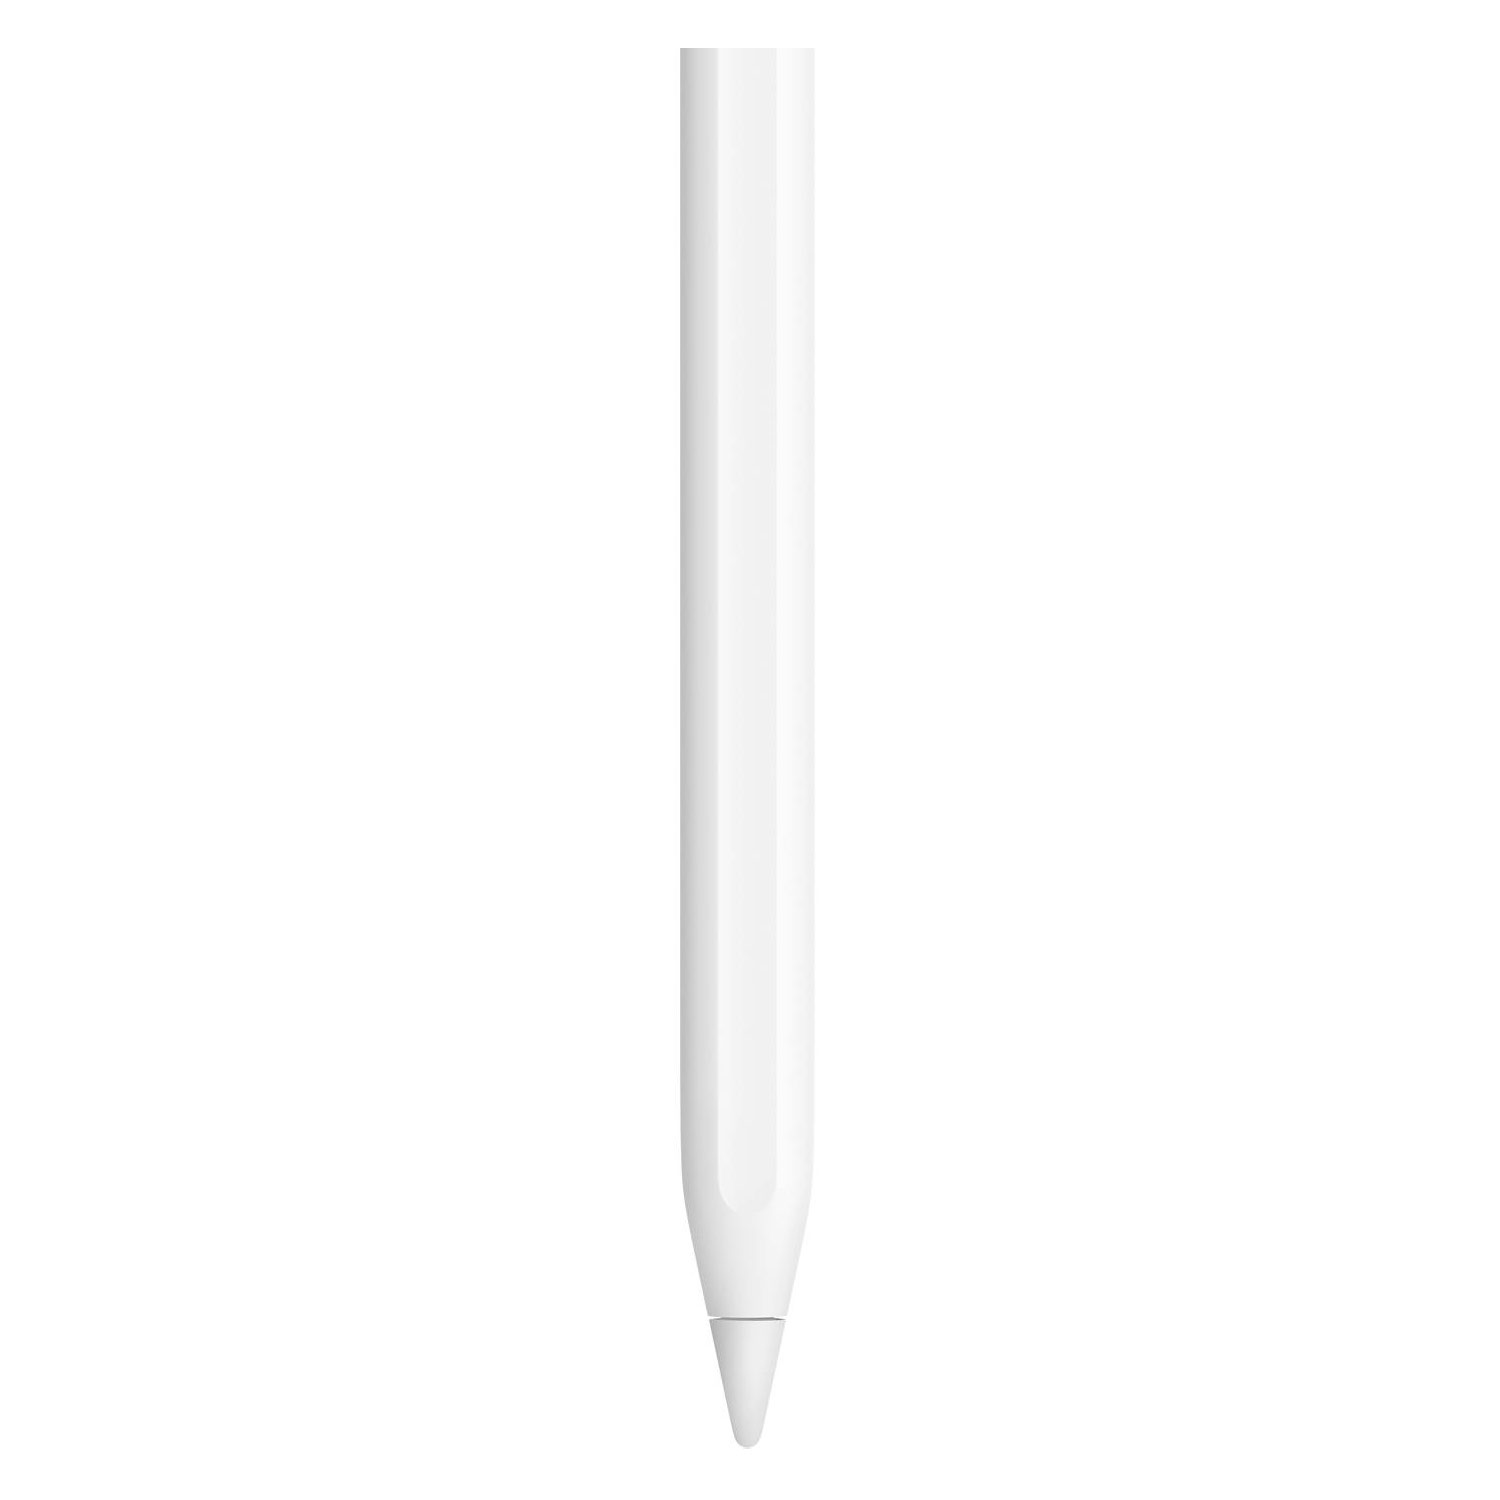 Apple Pencil 2 MU8F2AM/A para iPad - Branco (Caixa Danificada)